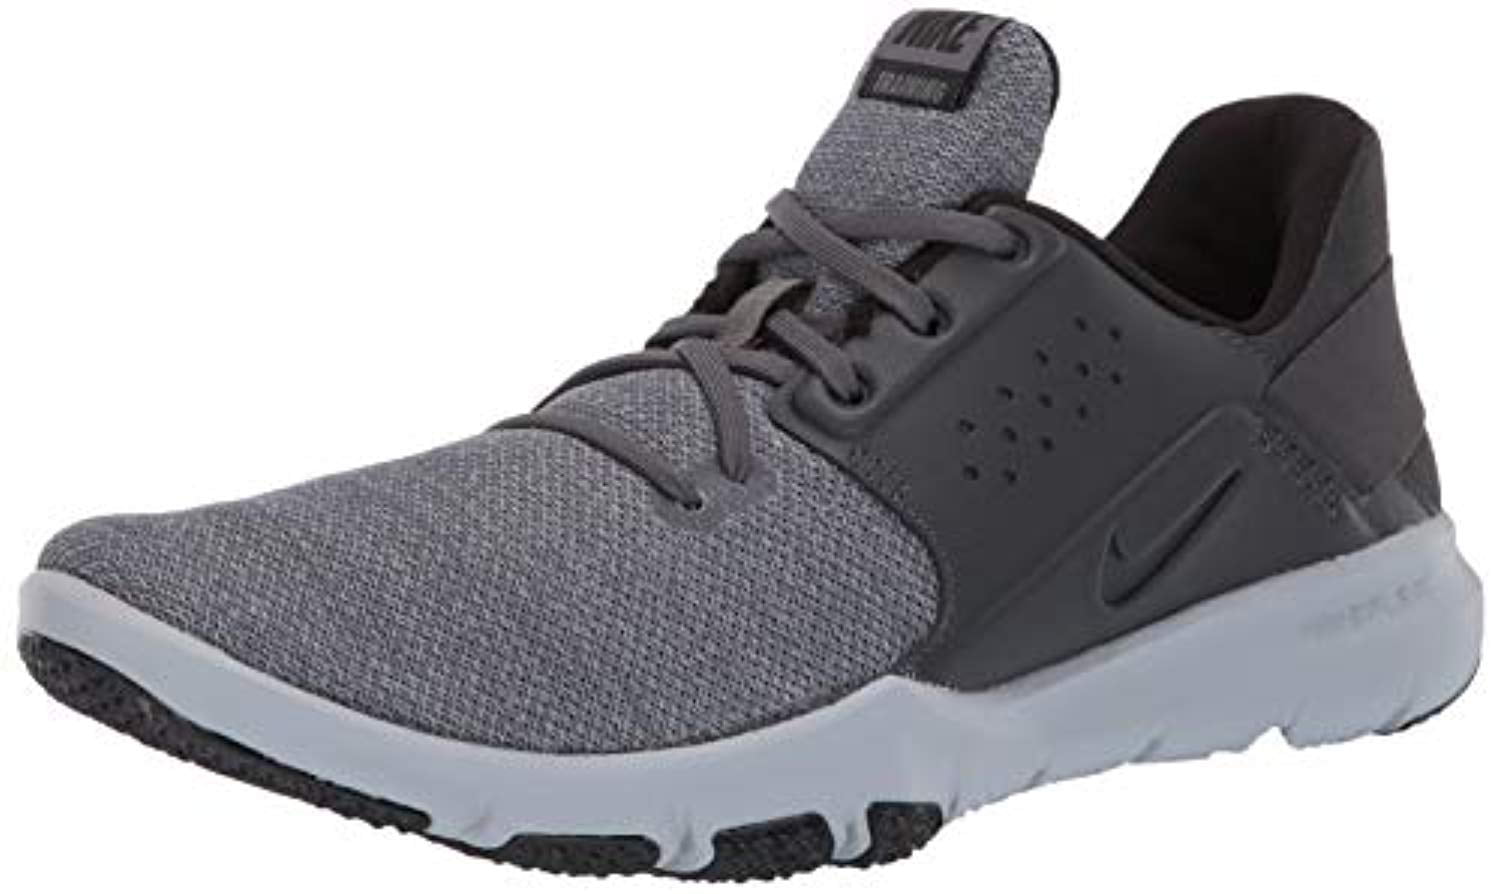 Nike Men's Flex Control Wide Sneaker, Anthracite-Black, 8 Walmart.com